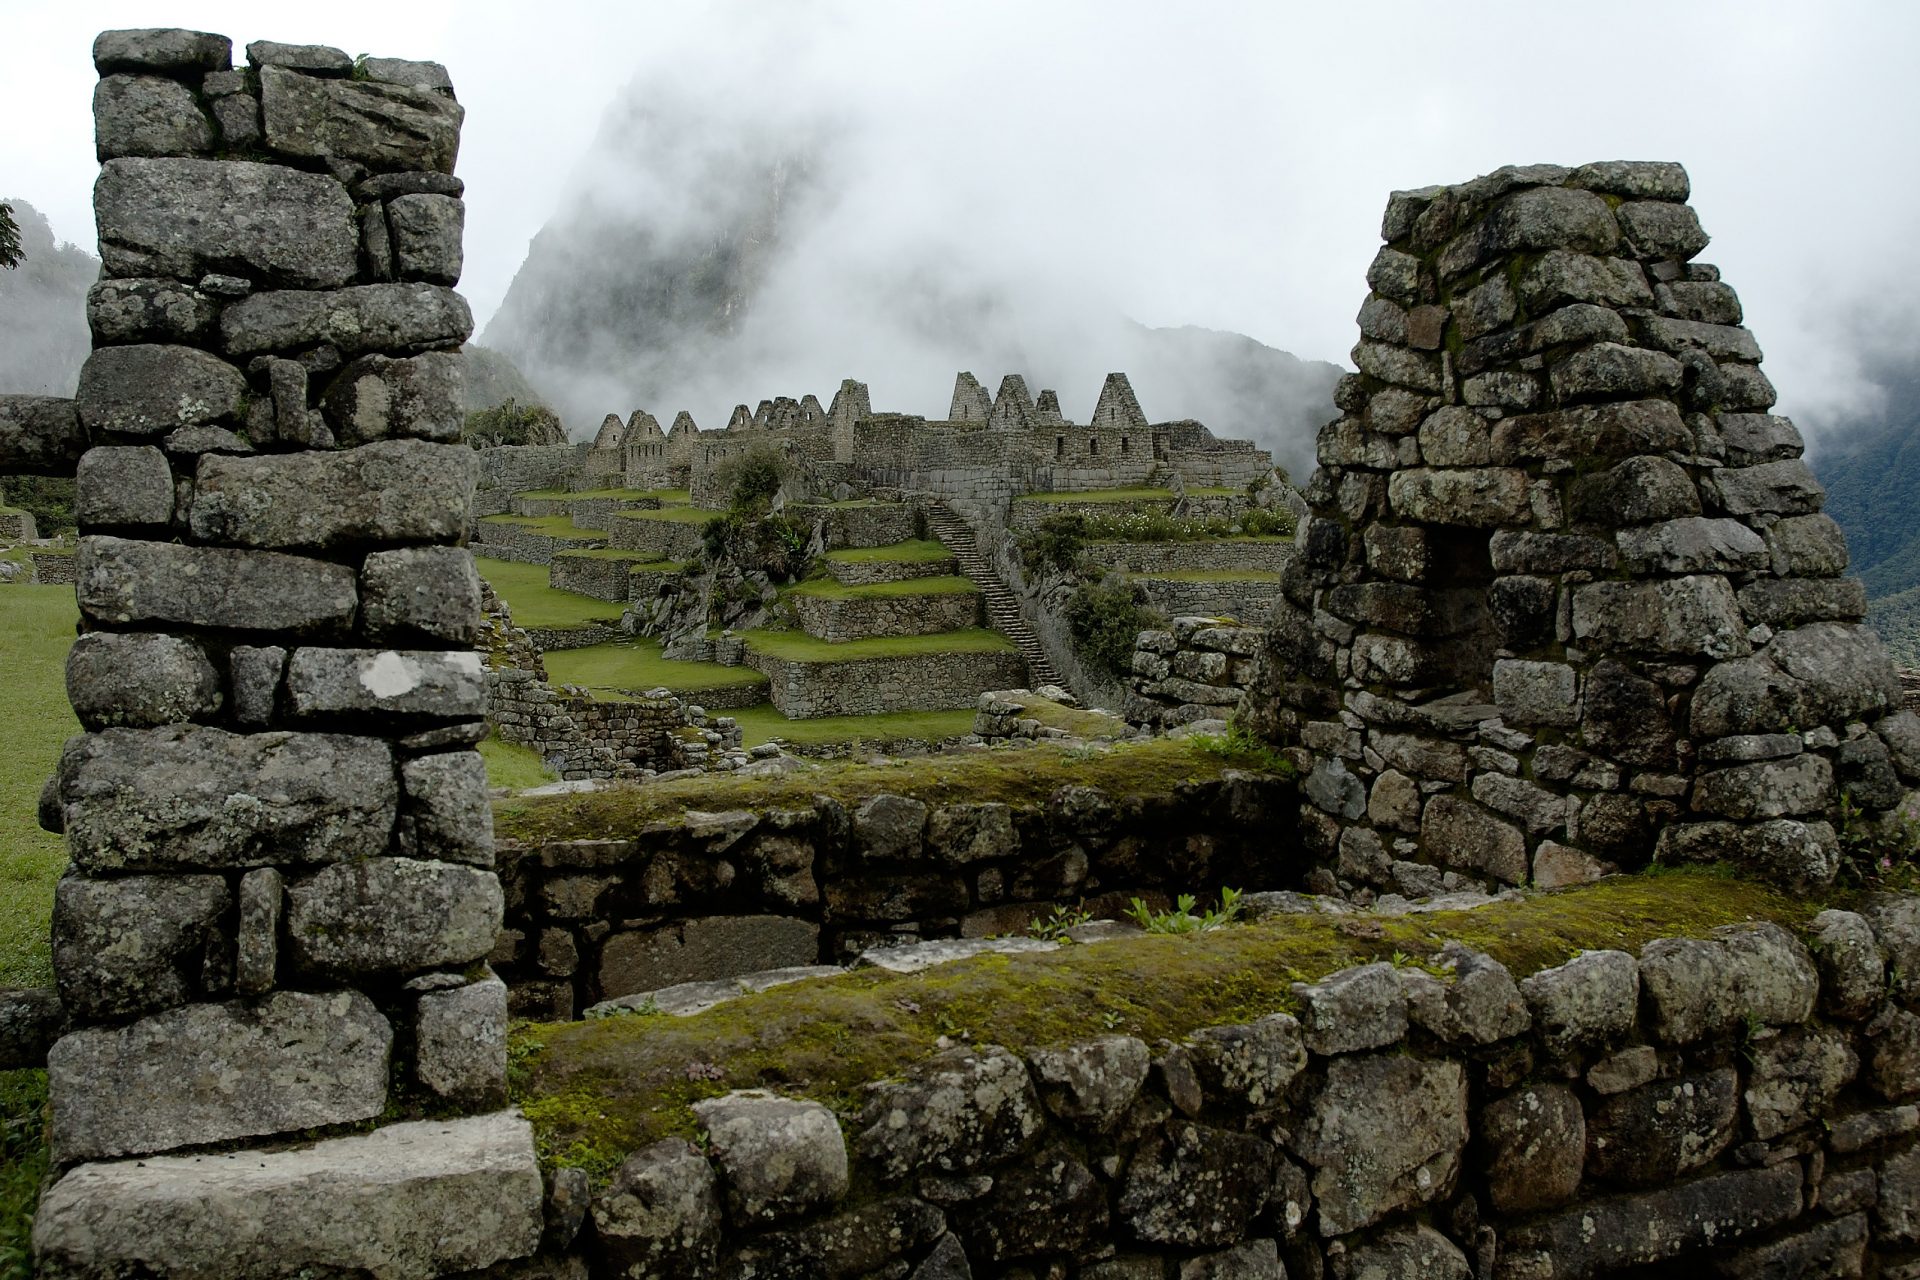 Popular theories about Machu Picchu 